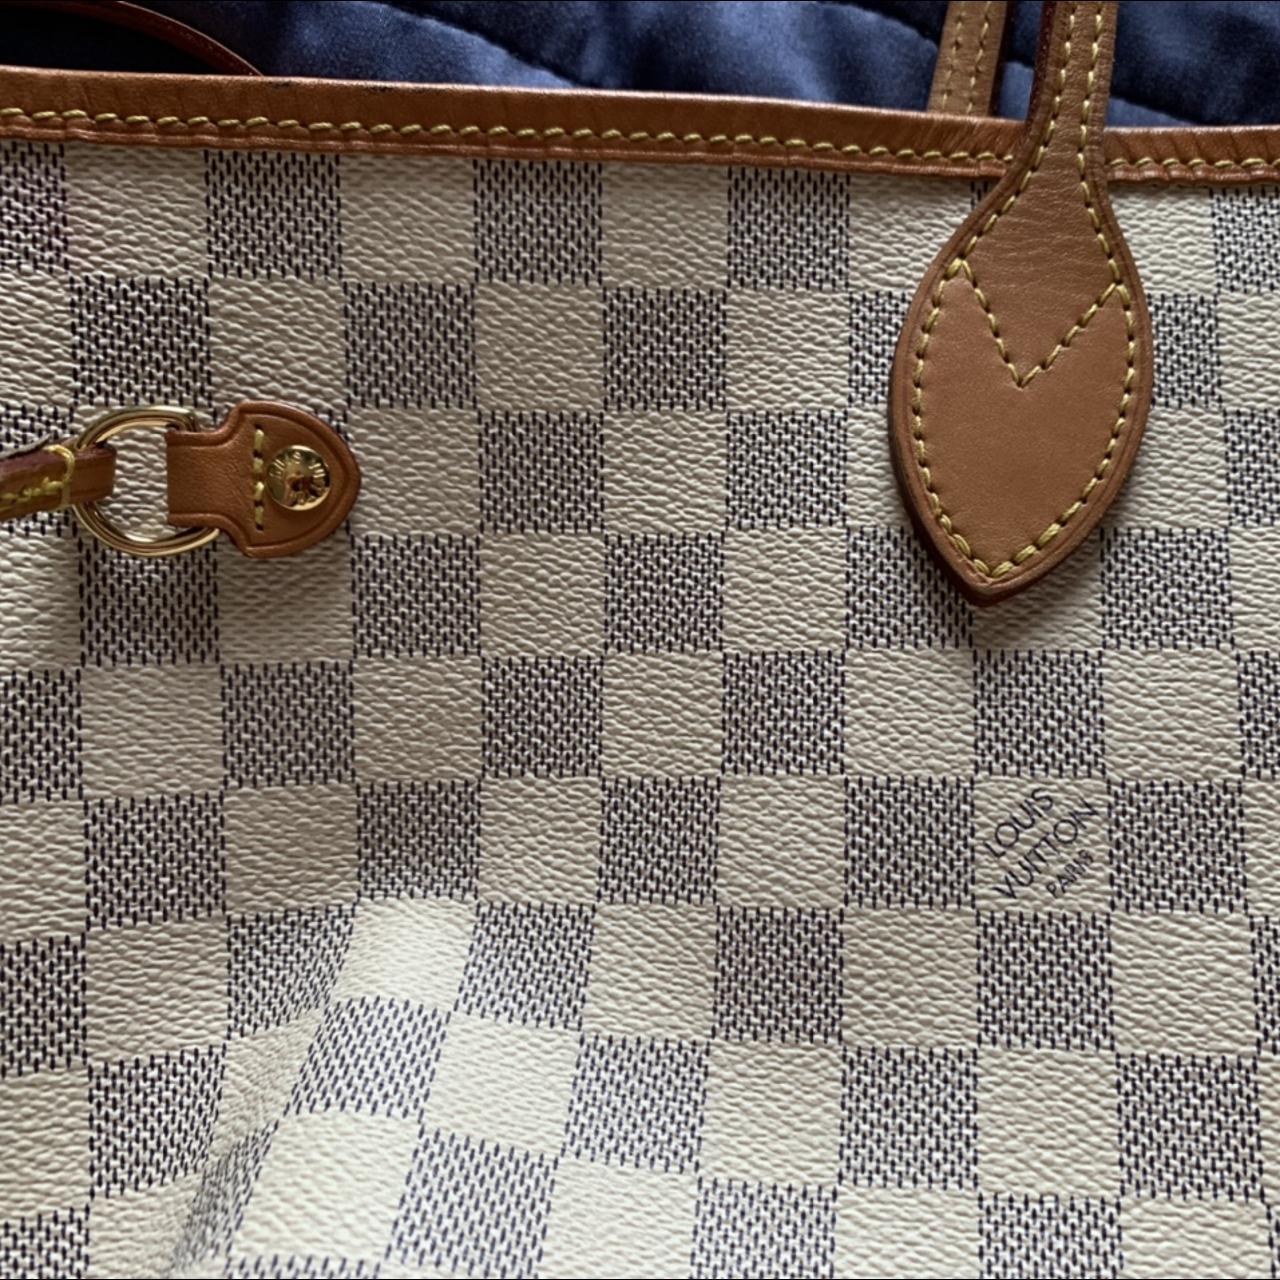 LV white checkered bag. Pink interior. Size: - Depop